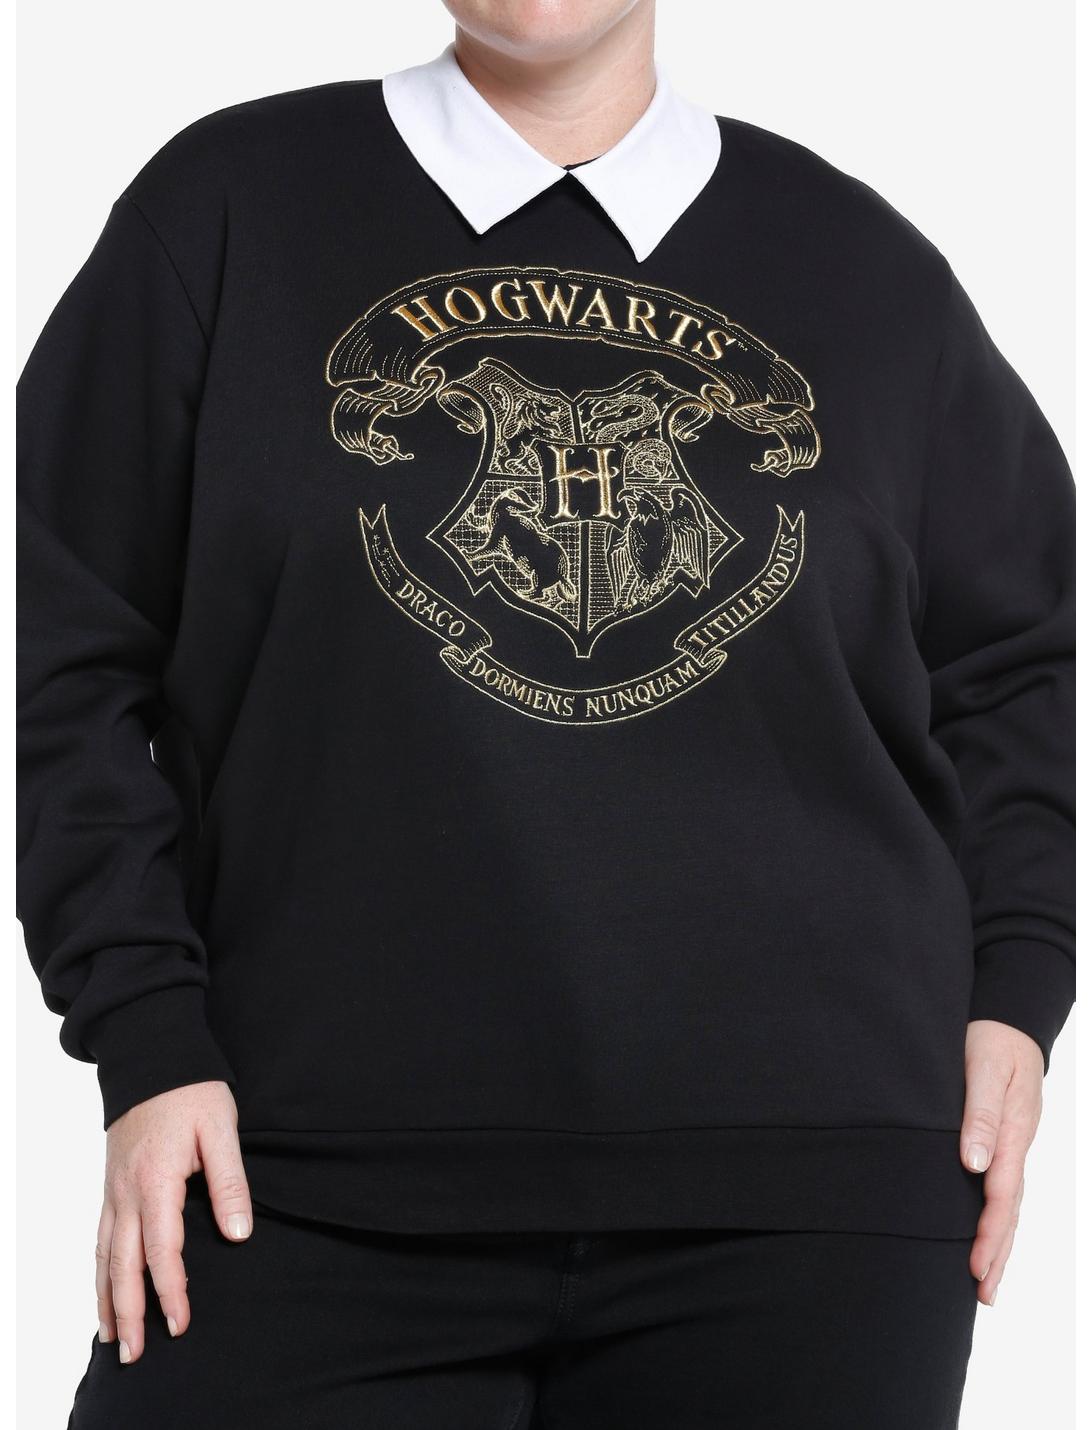 Harry Potter Hogwarts Collared Sweatshirt Plus Size, BLACK, hi-res